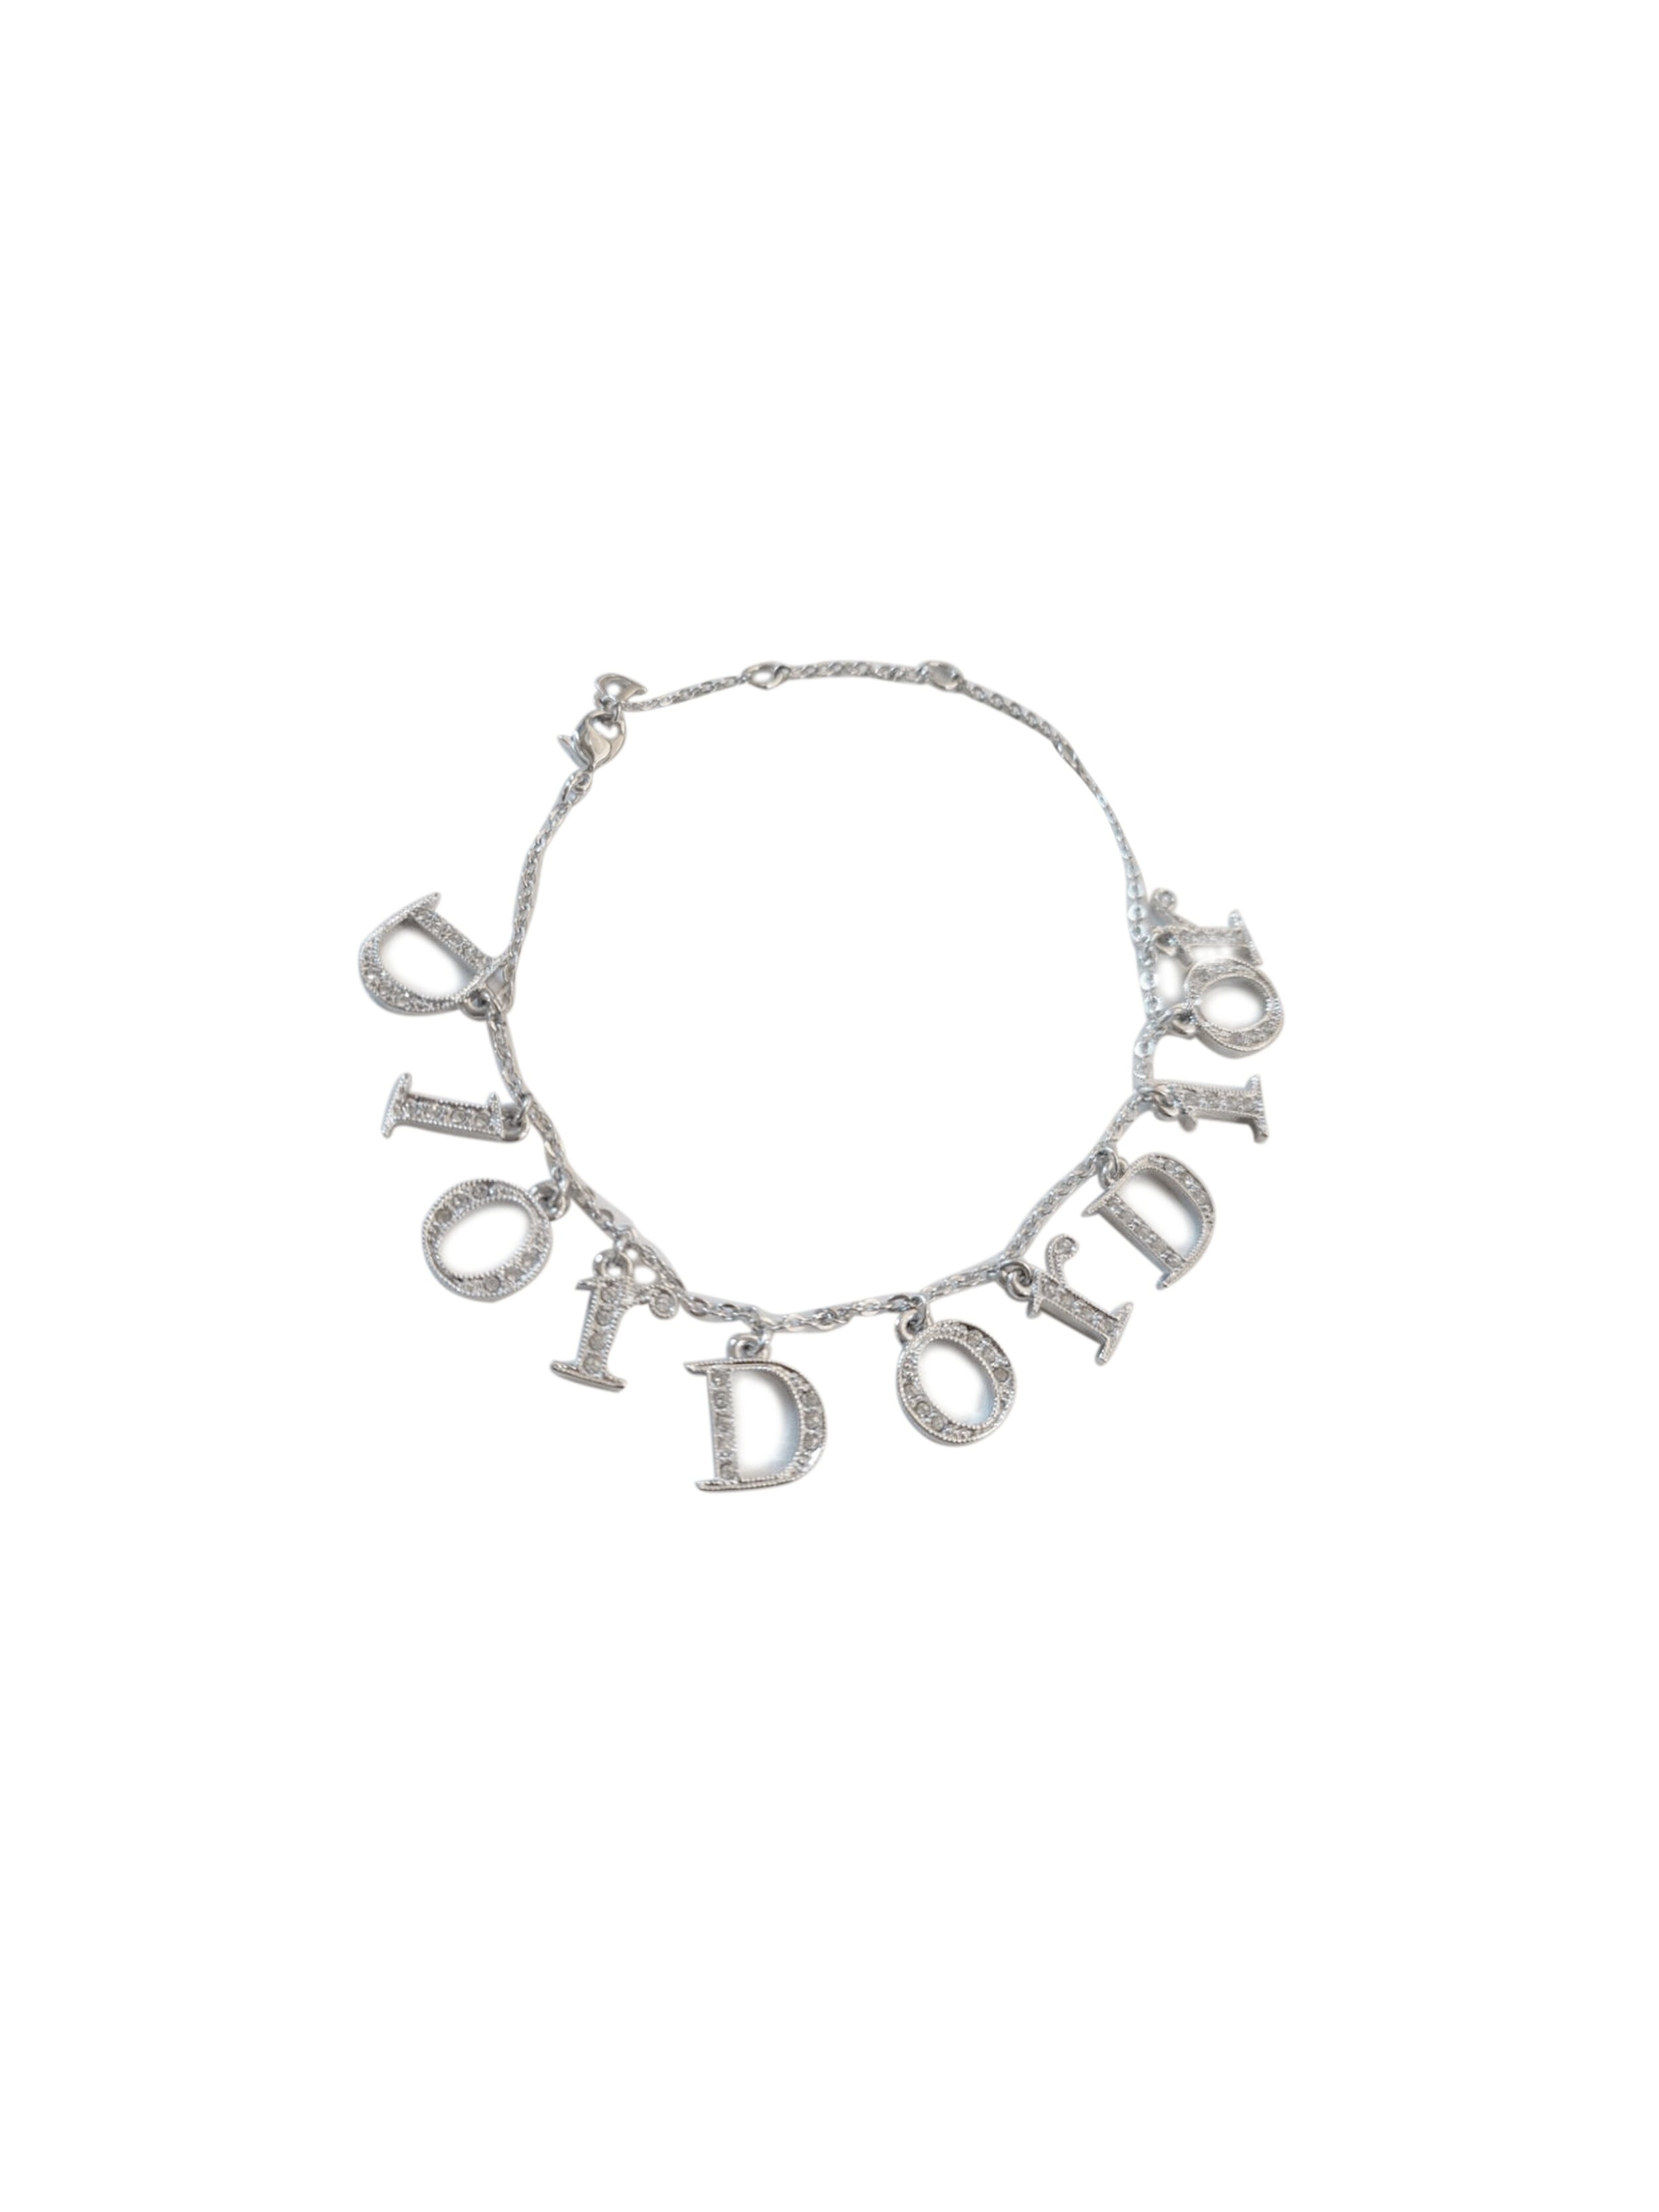 Christian Dior 2000s Silver Triple Bracelet